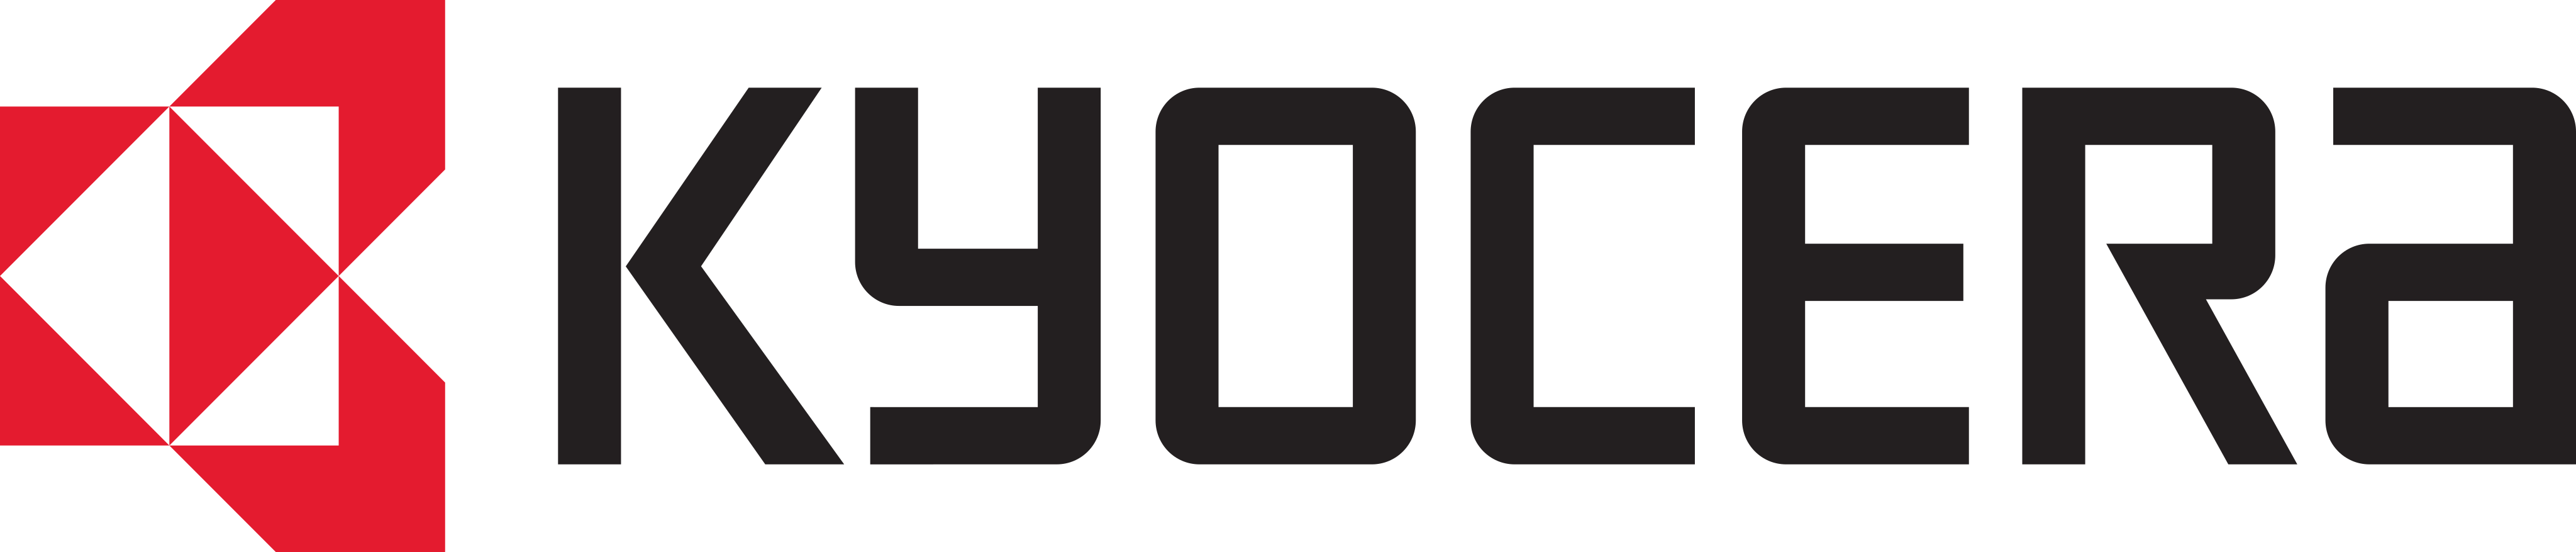 kyocera logo - Kyocera Logo